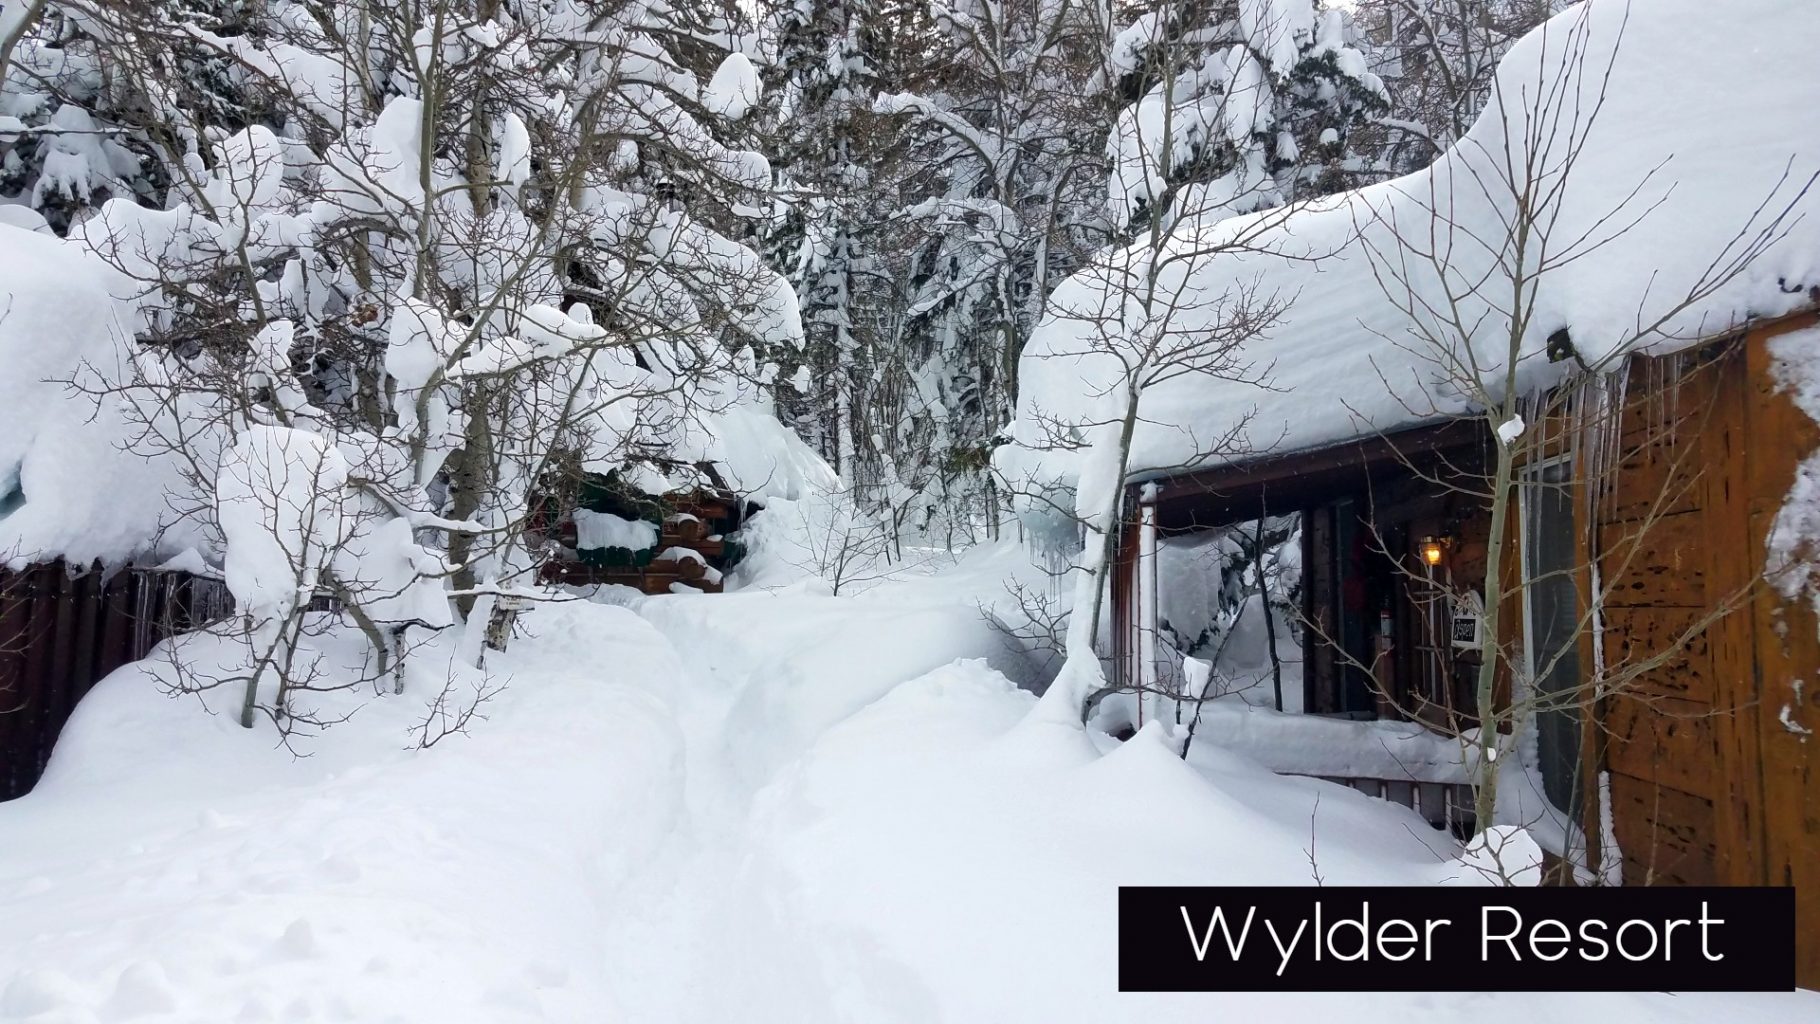 Wylder resort Winter image